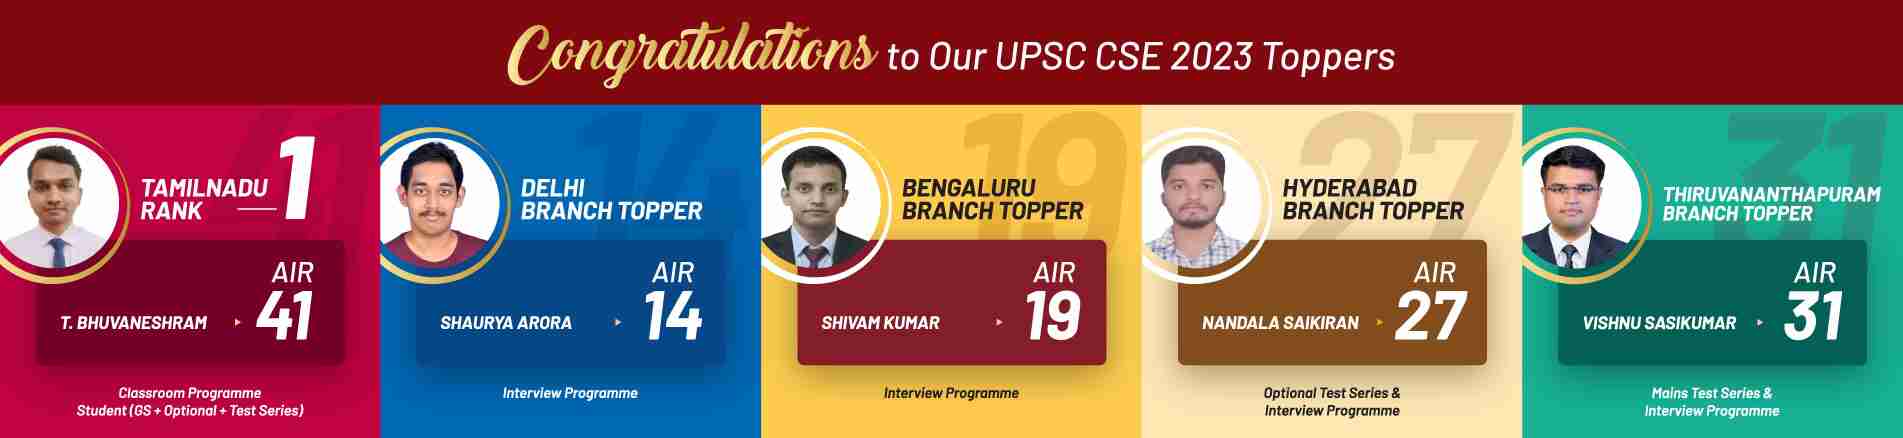 National Topper UPSC 2023